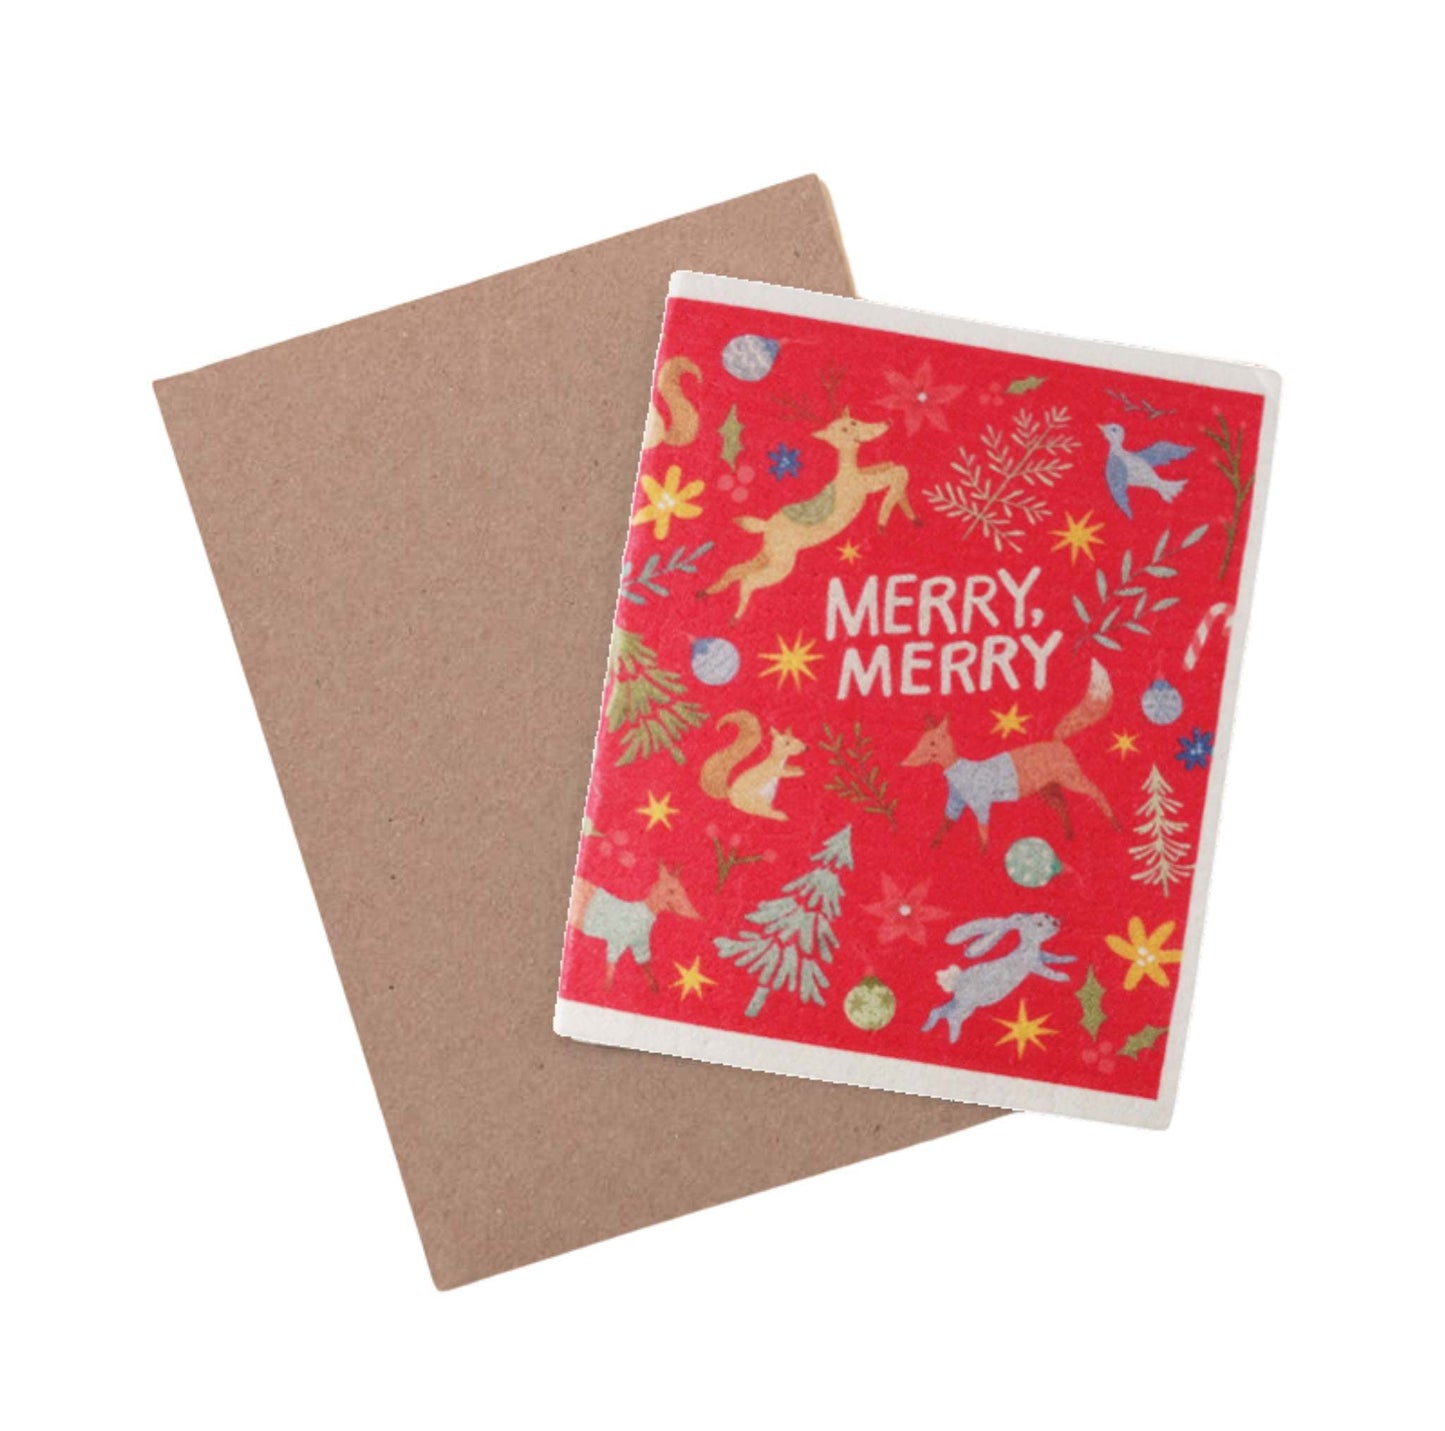 Faerly Cards Merry Merry Wishcloth™ - The Swedish Dishcloth Greeting Card